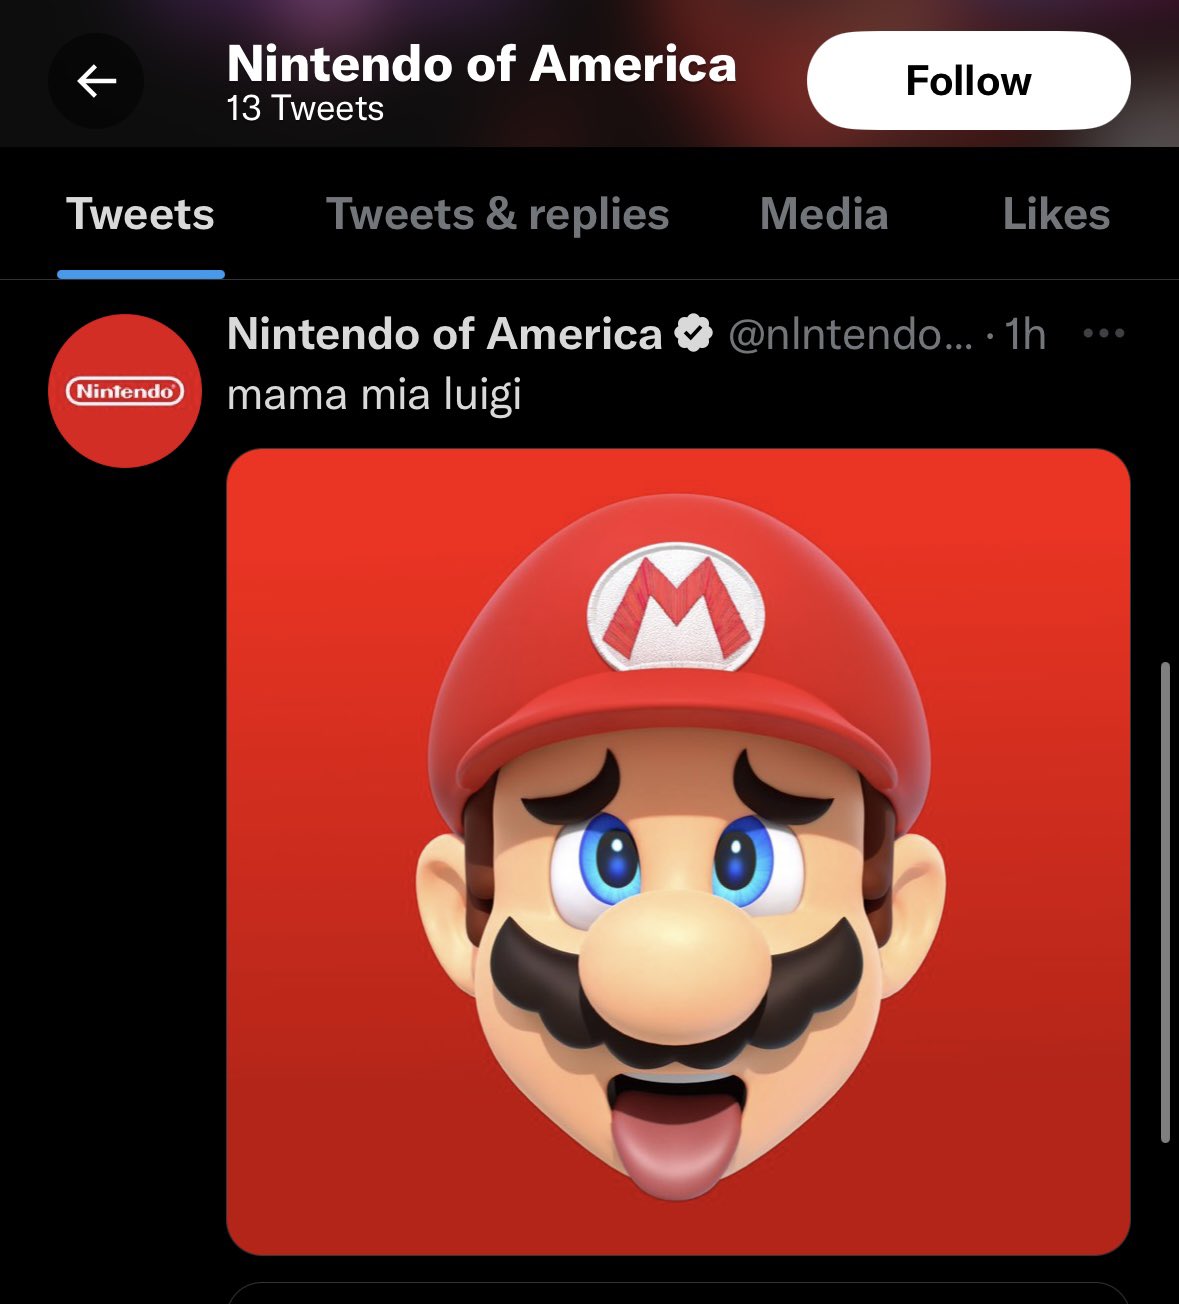 fake twitter posts - Nintendo of America 13 Tweets Tweets Tweets & replies Nintendo Media Nintendo of America ... 1h mama mia luigi